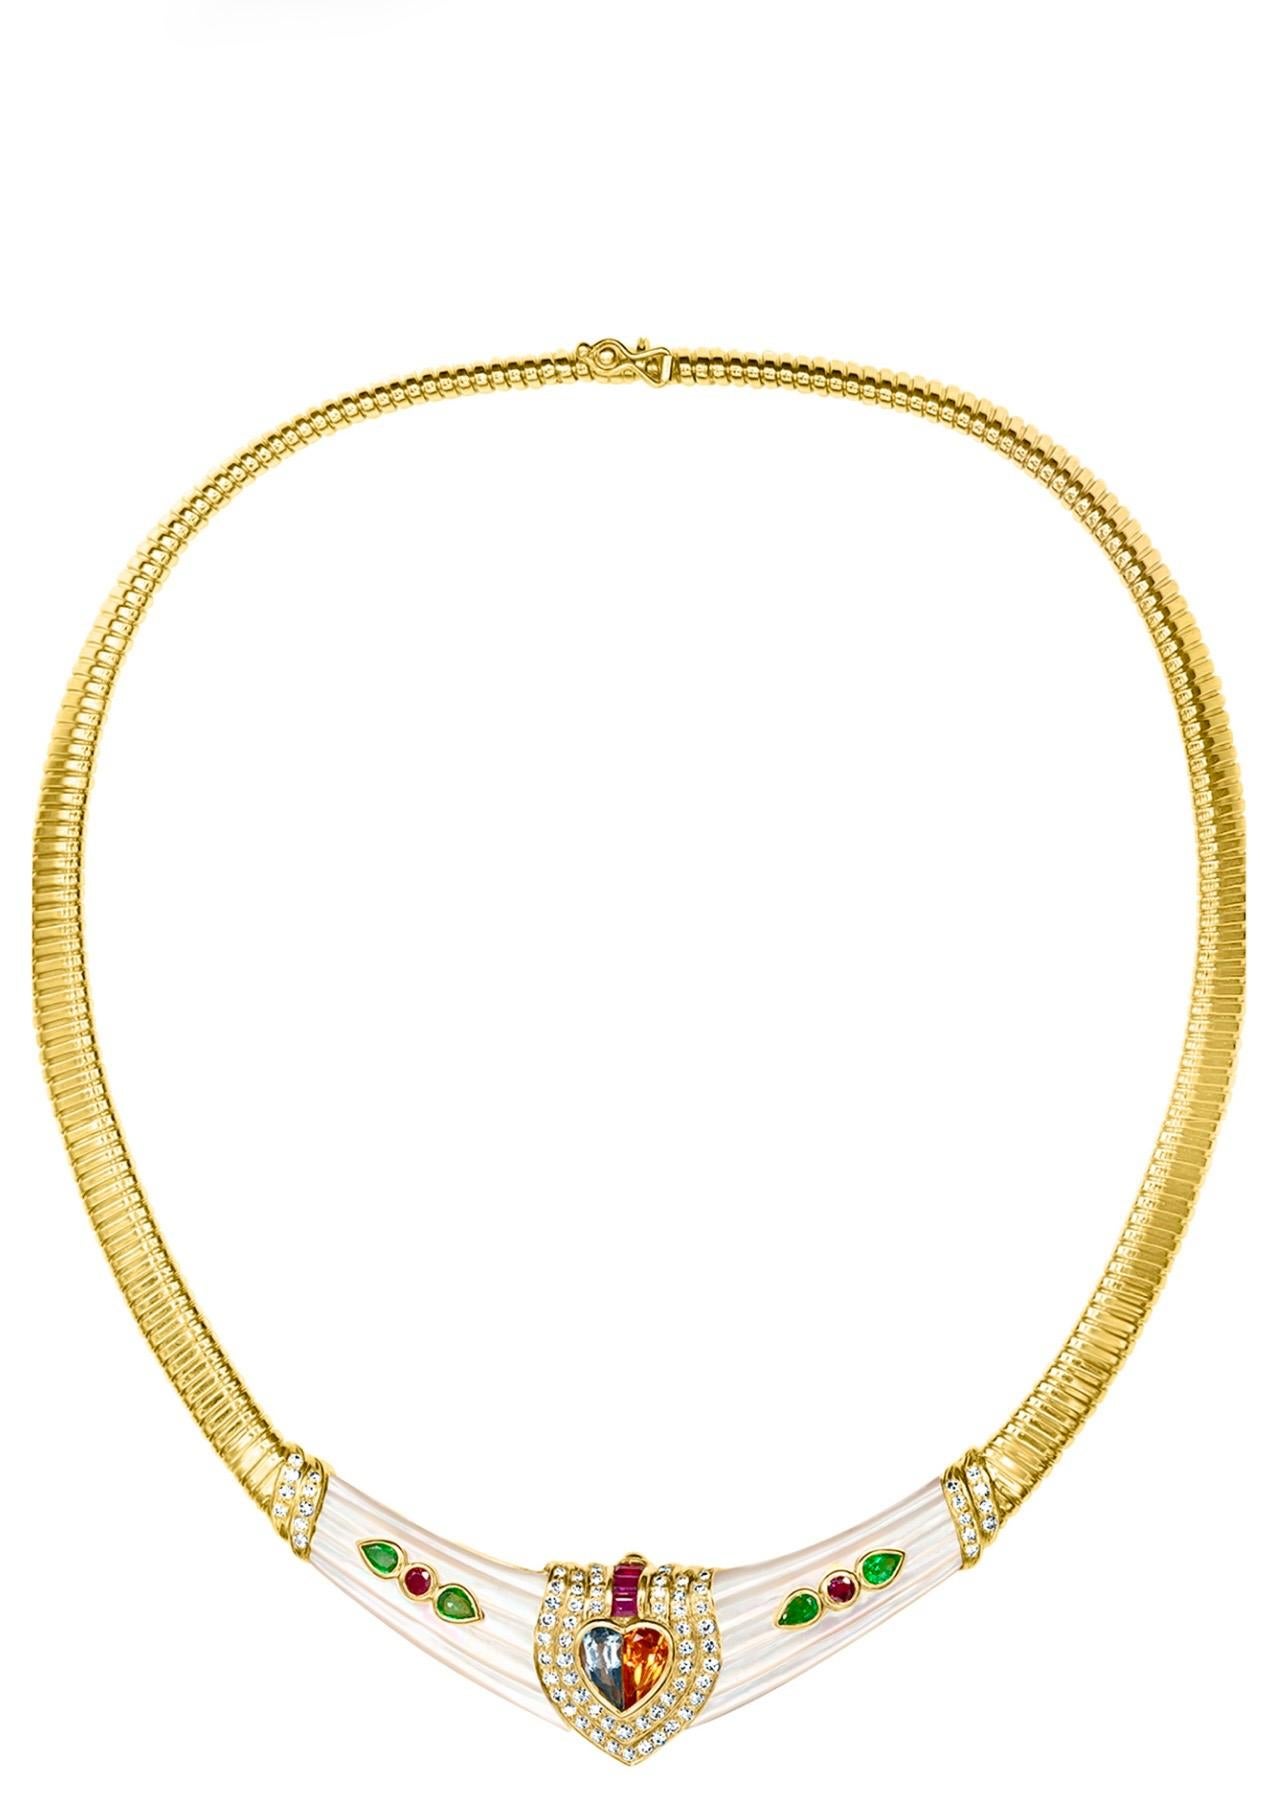 hasli necklace gold